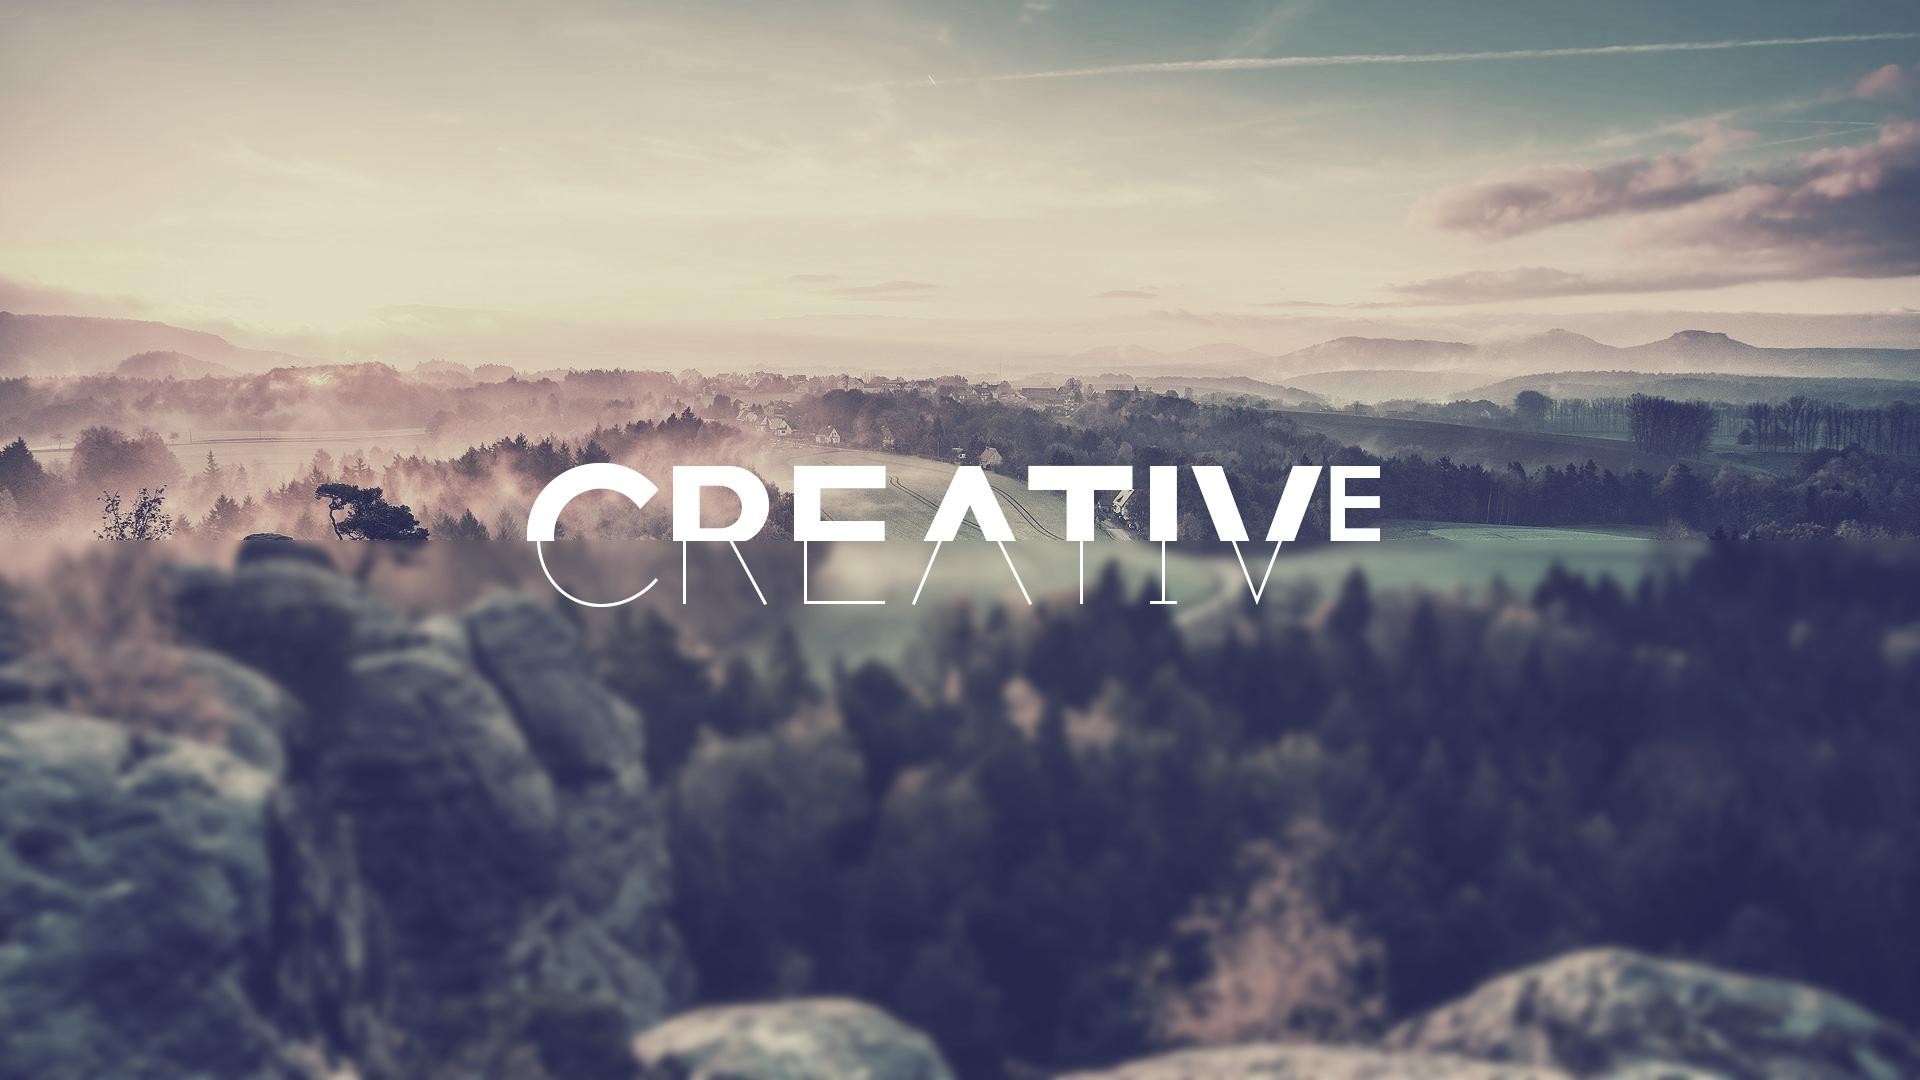 Landscape, Typography, Blurred, Filter, Creativity Wallpaper